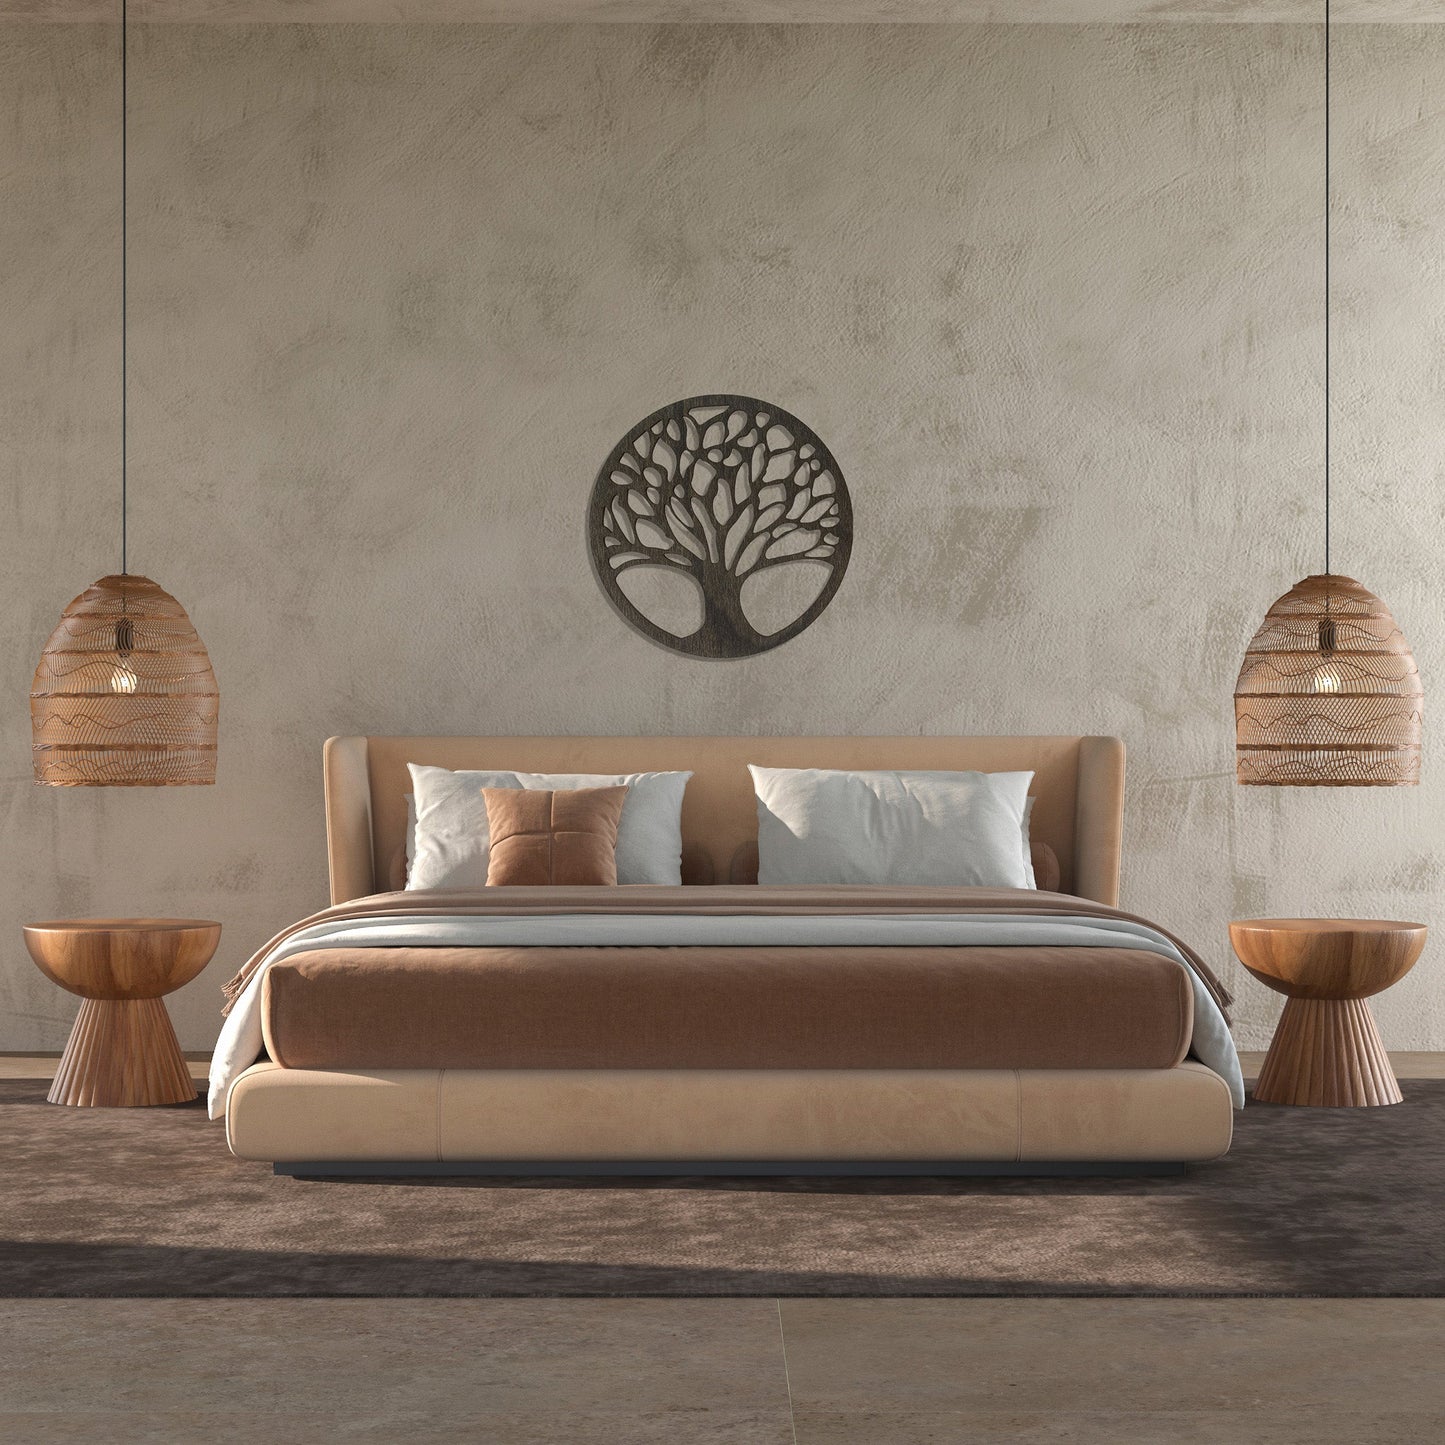 Wandbild Holz "Baum des Lebens" V4 - Nanino Design Onlineshop -